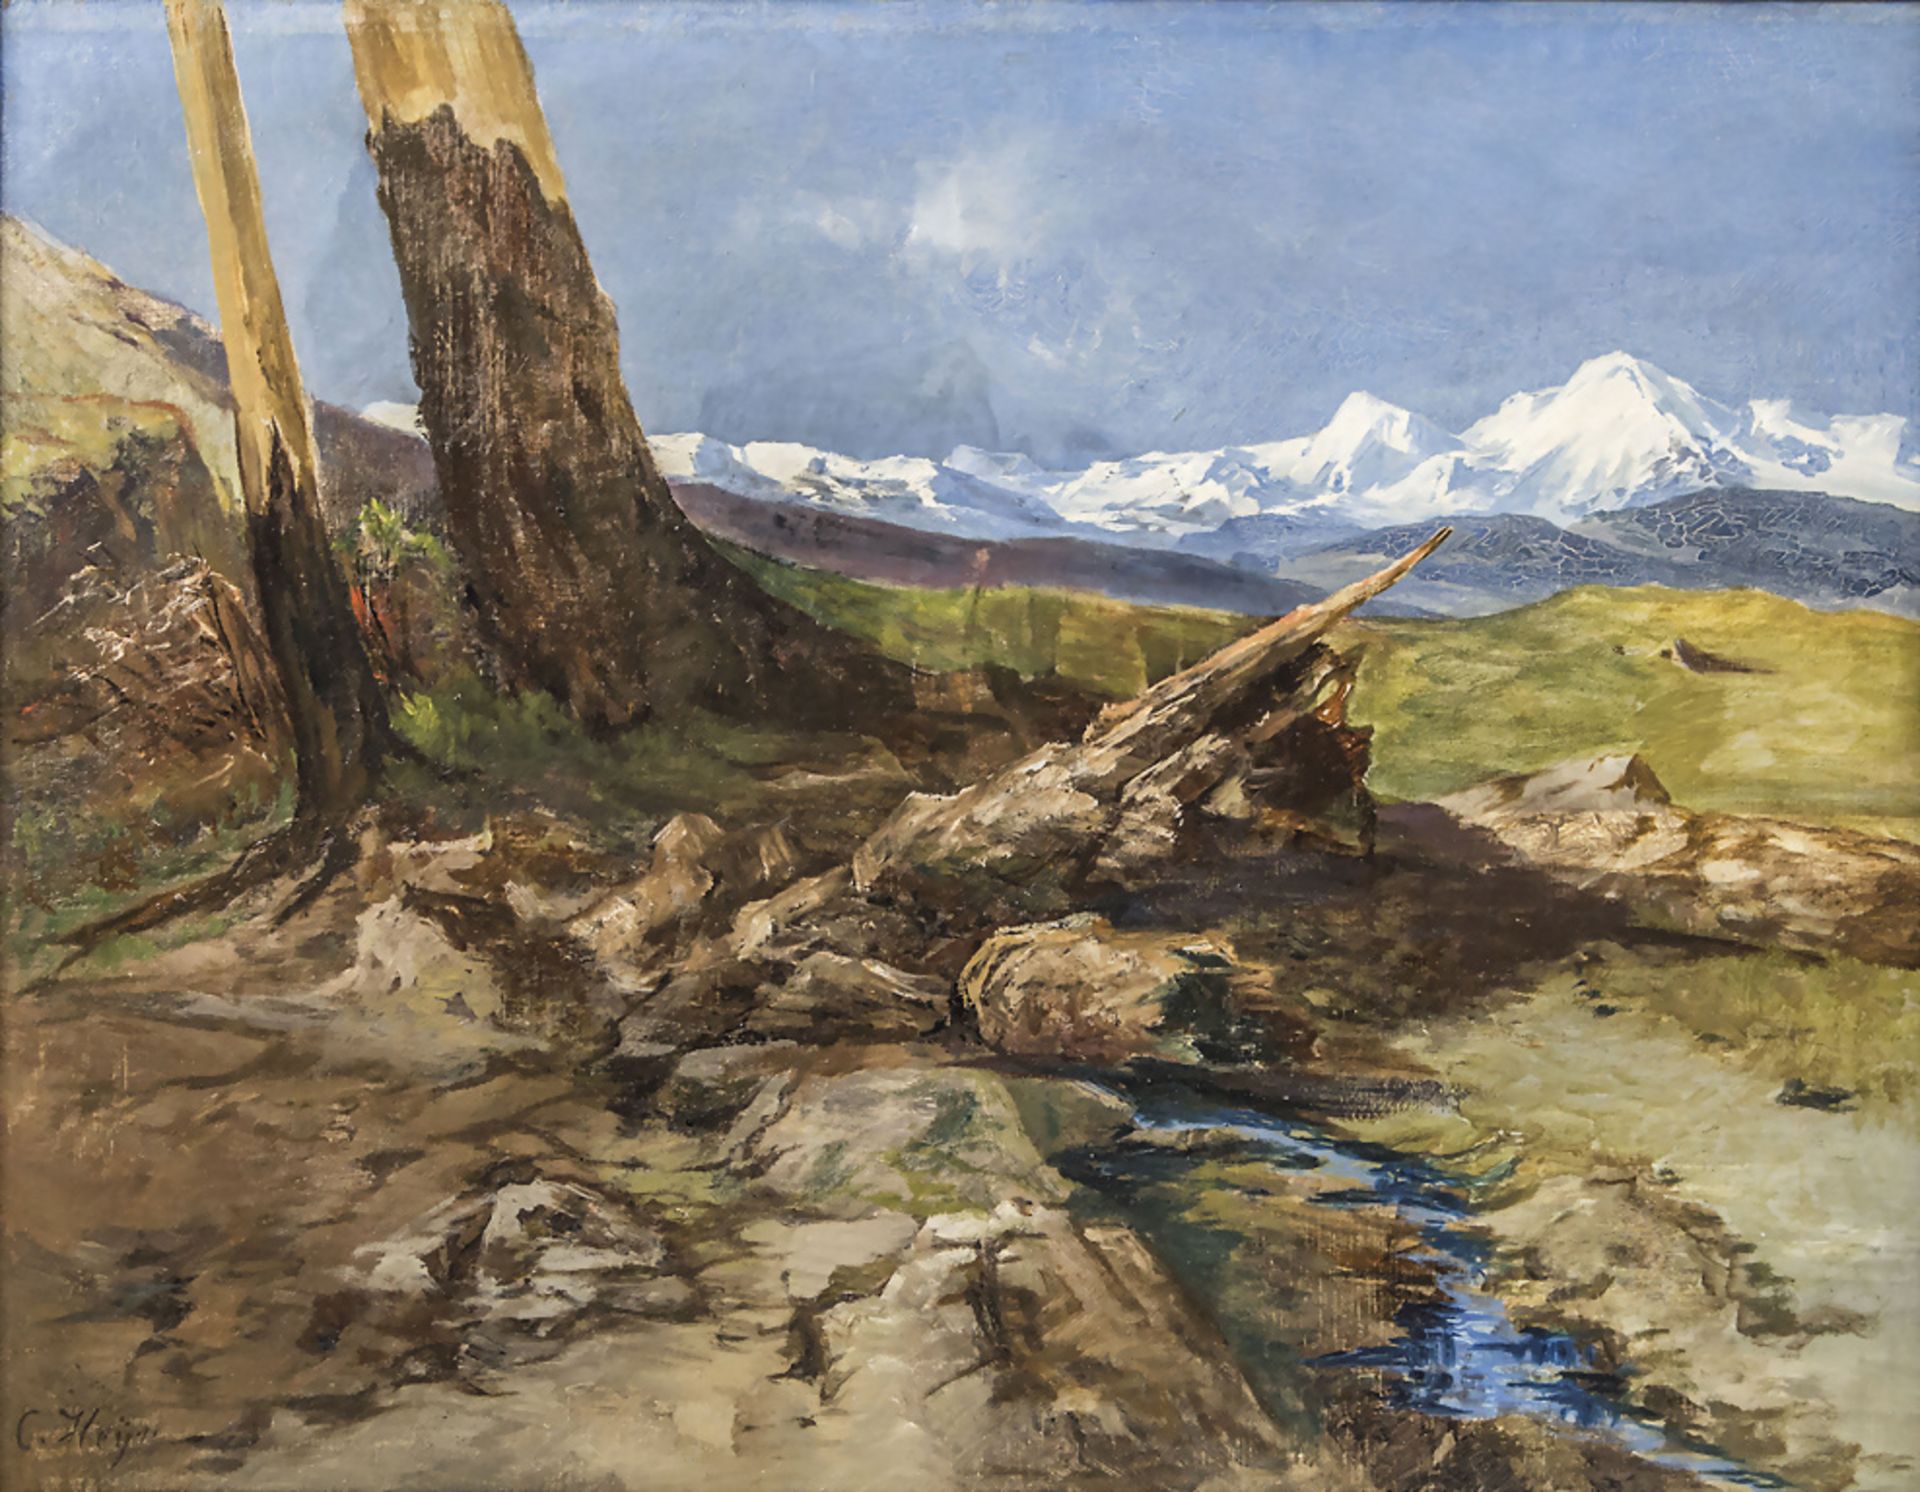 Carl HEYN (1834-1906), 'Gebirgsansicht' / 'Mountain view'